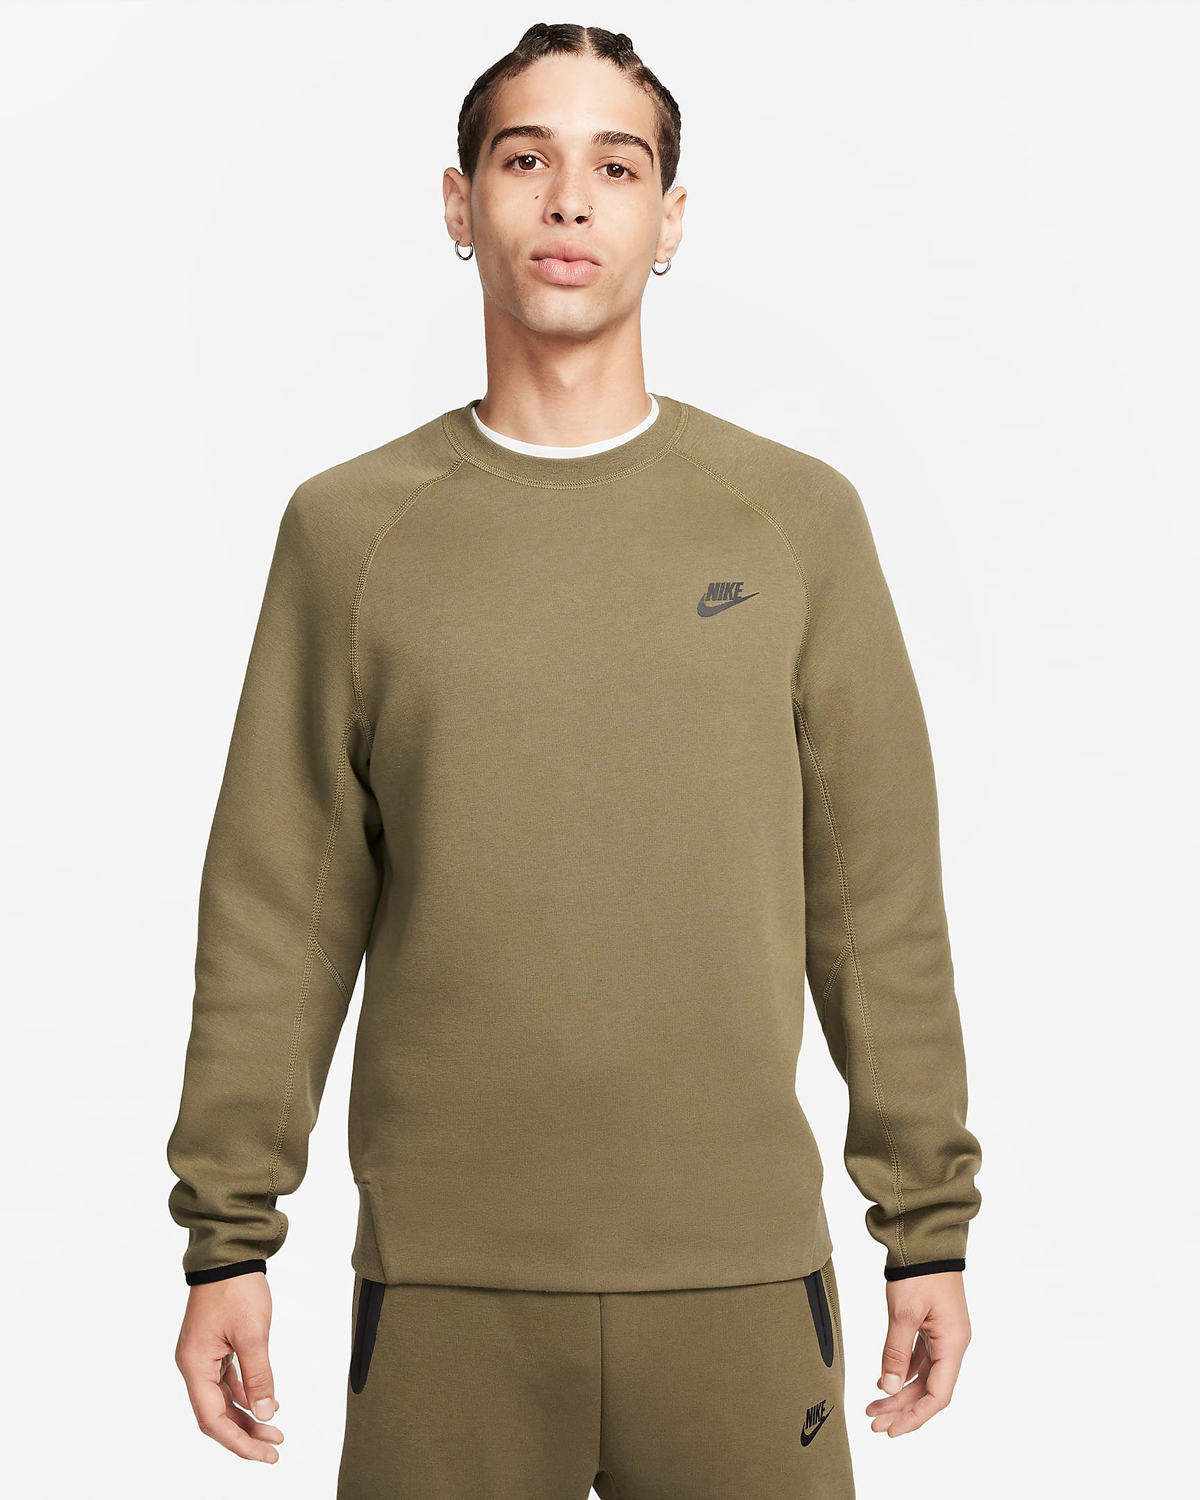 Nike-Tech-Fleece-Crew-Sweatshirt-Medium-Olive-Black